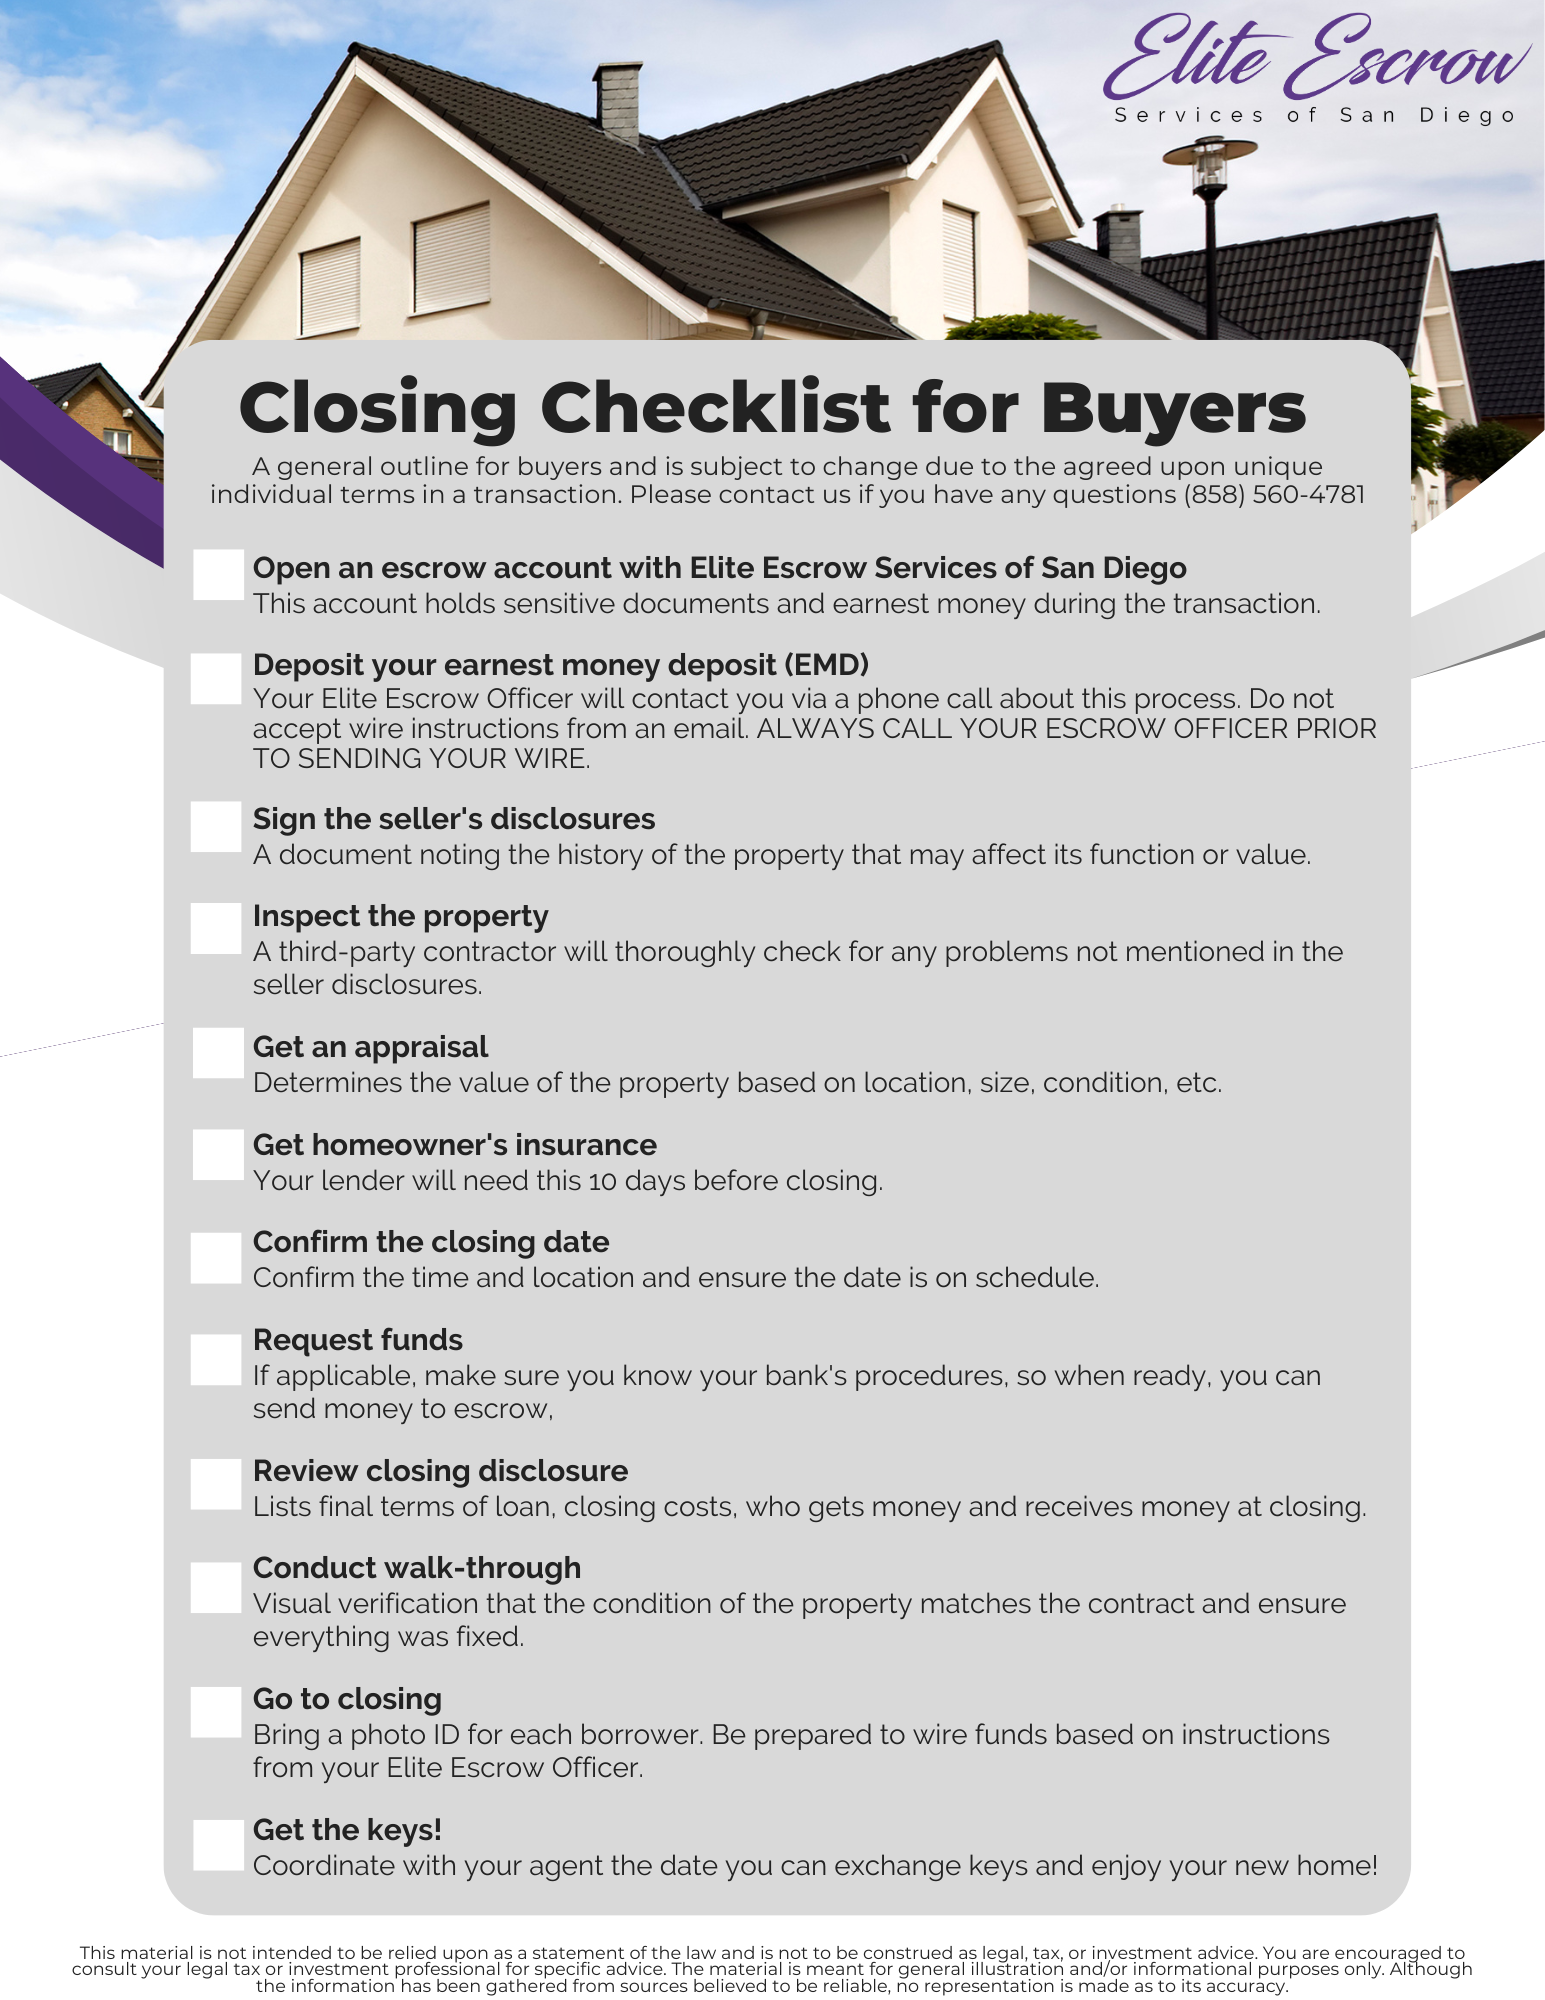 Closing Checklist: Buyers